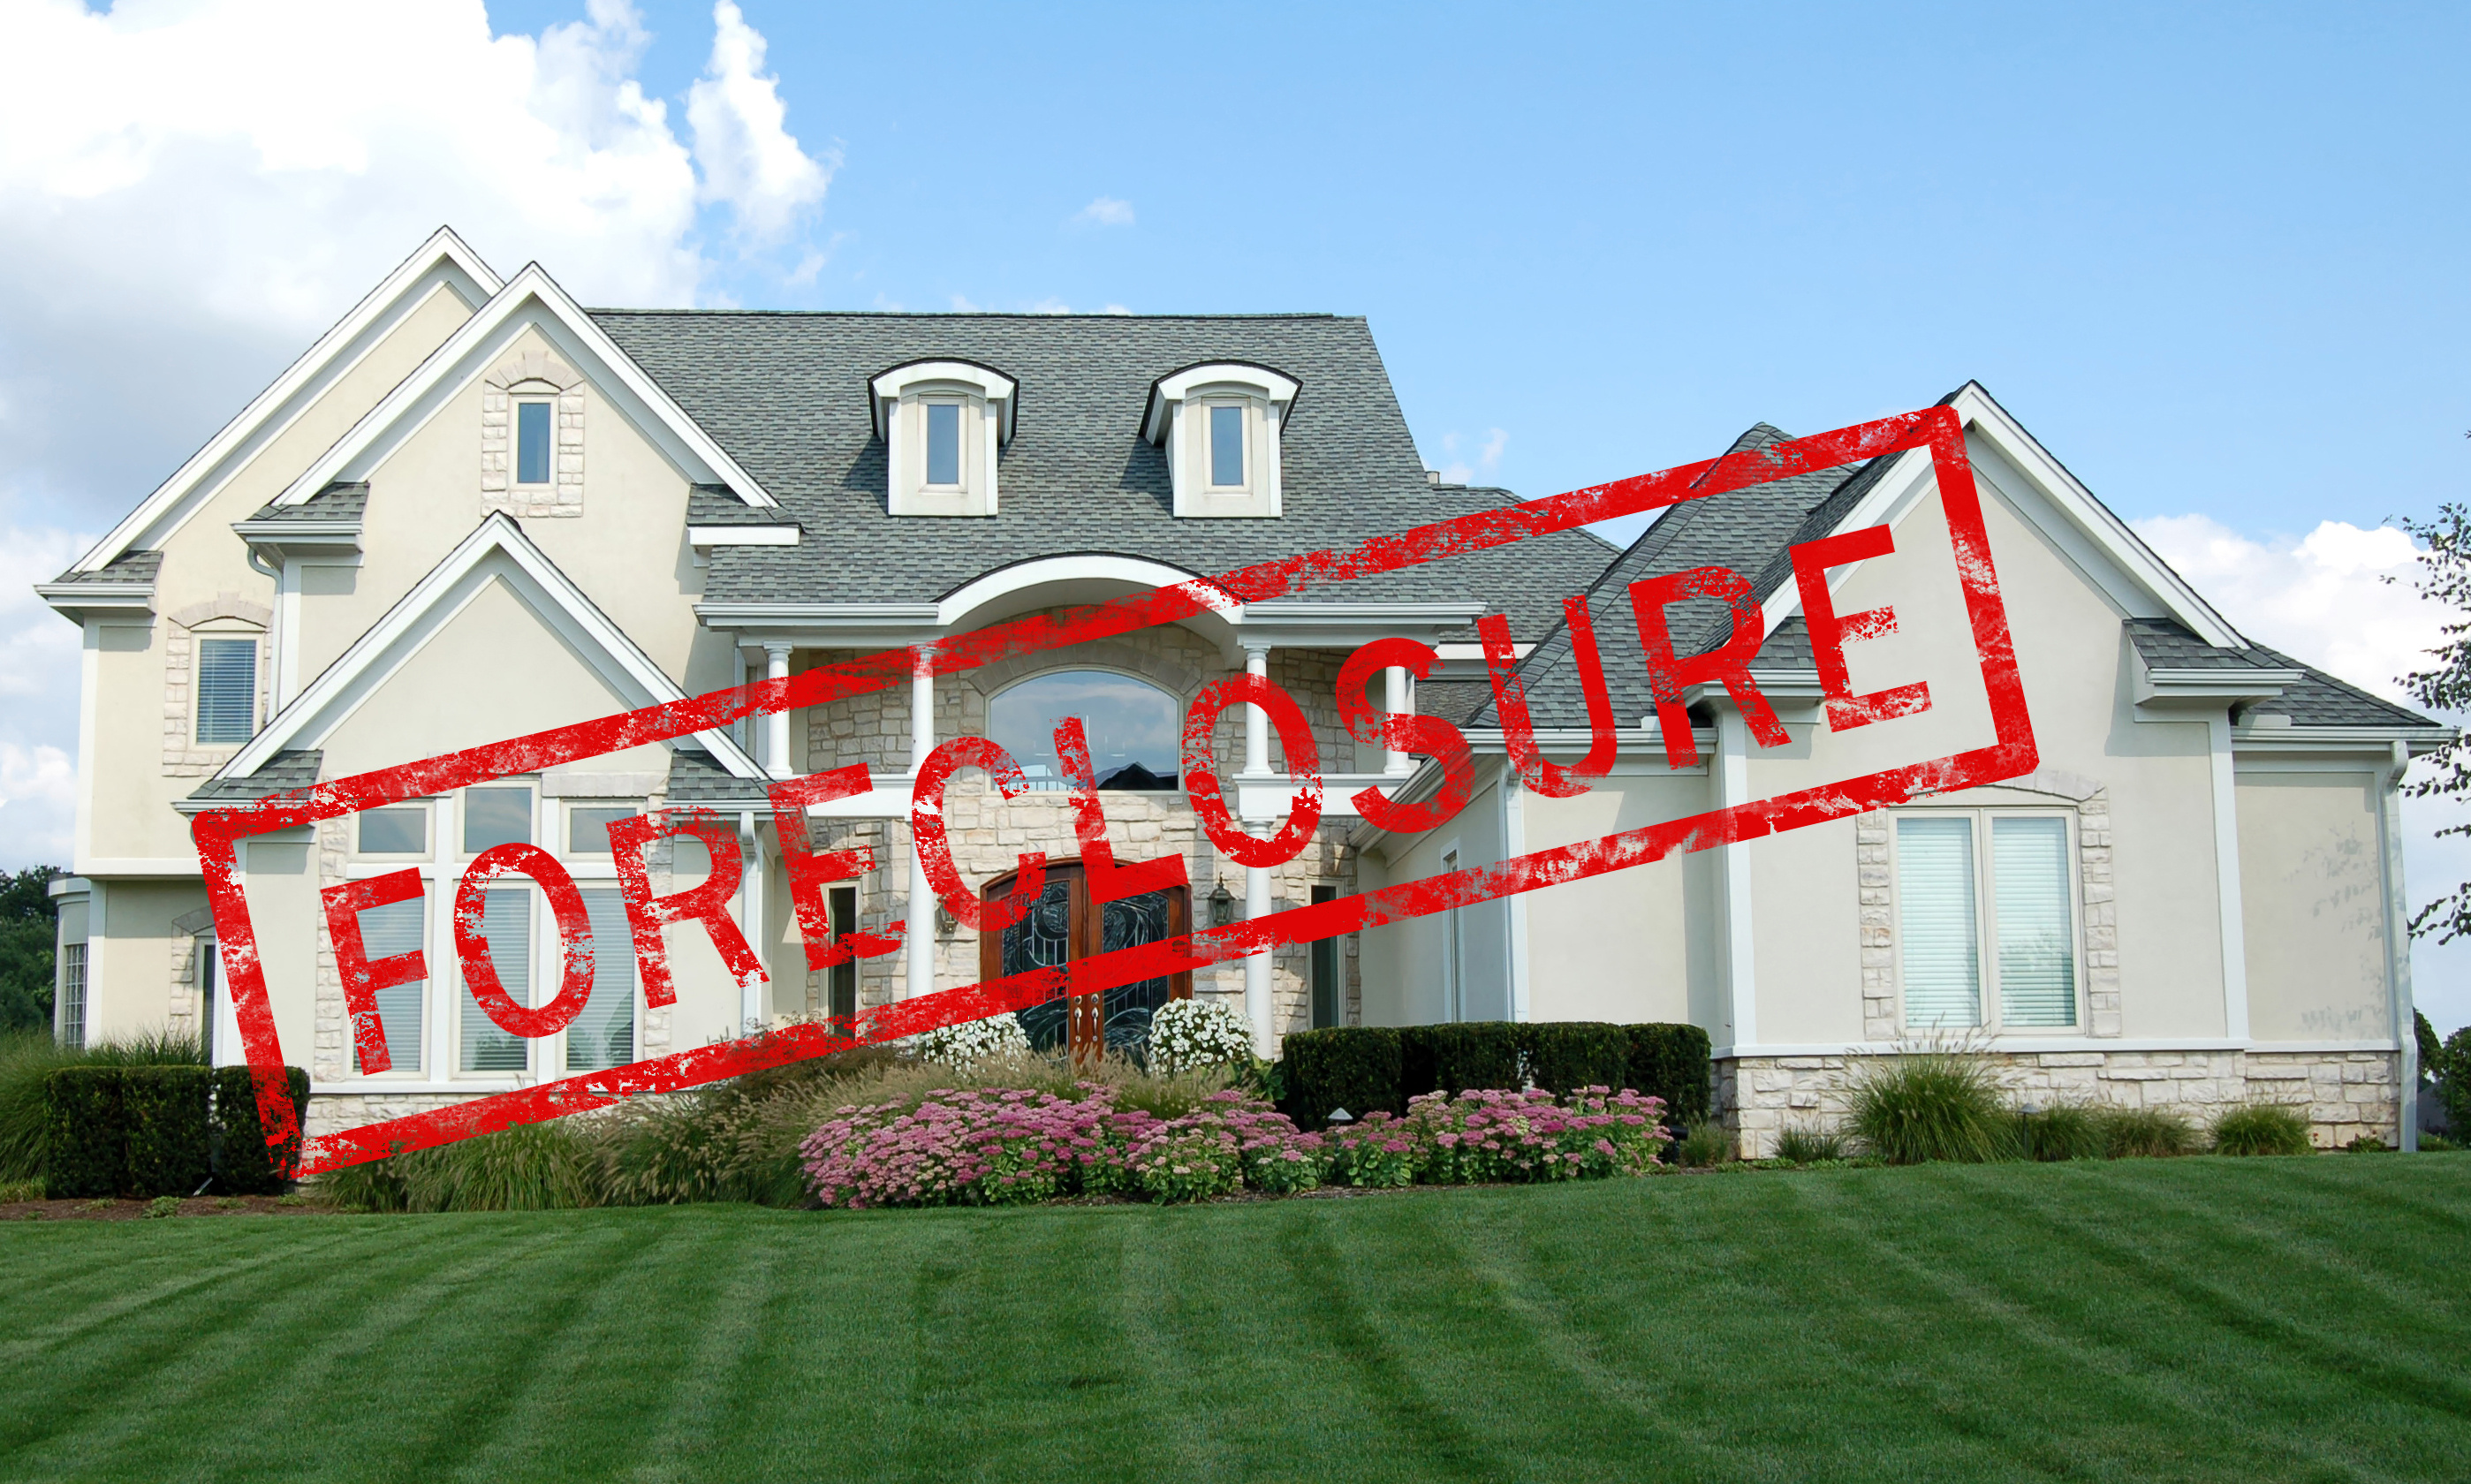 Call Accurate Appraisals to discuss appraisals regarding none foreclosures